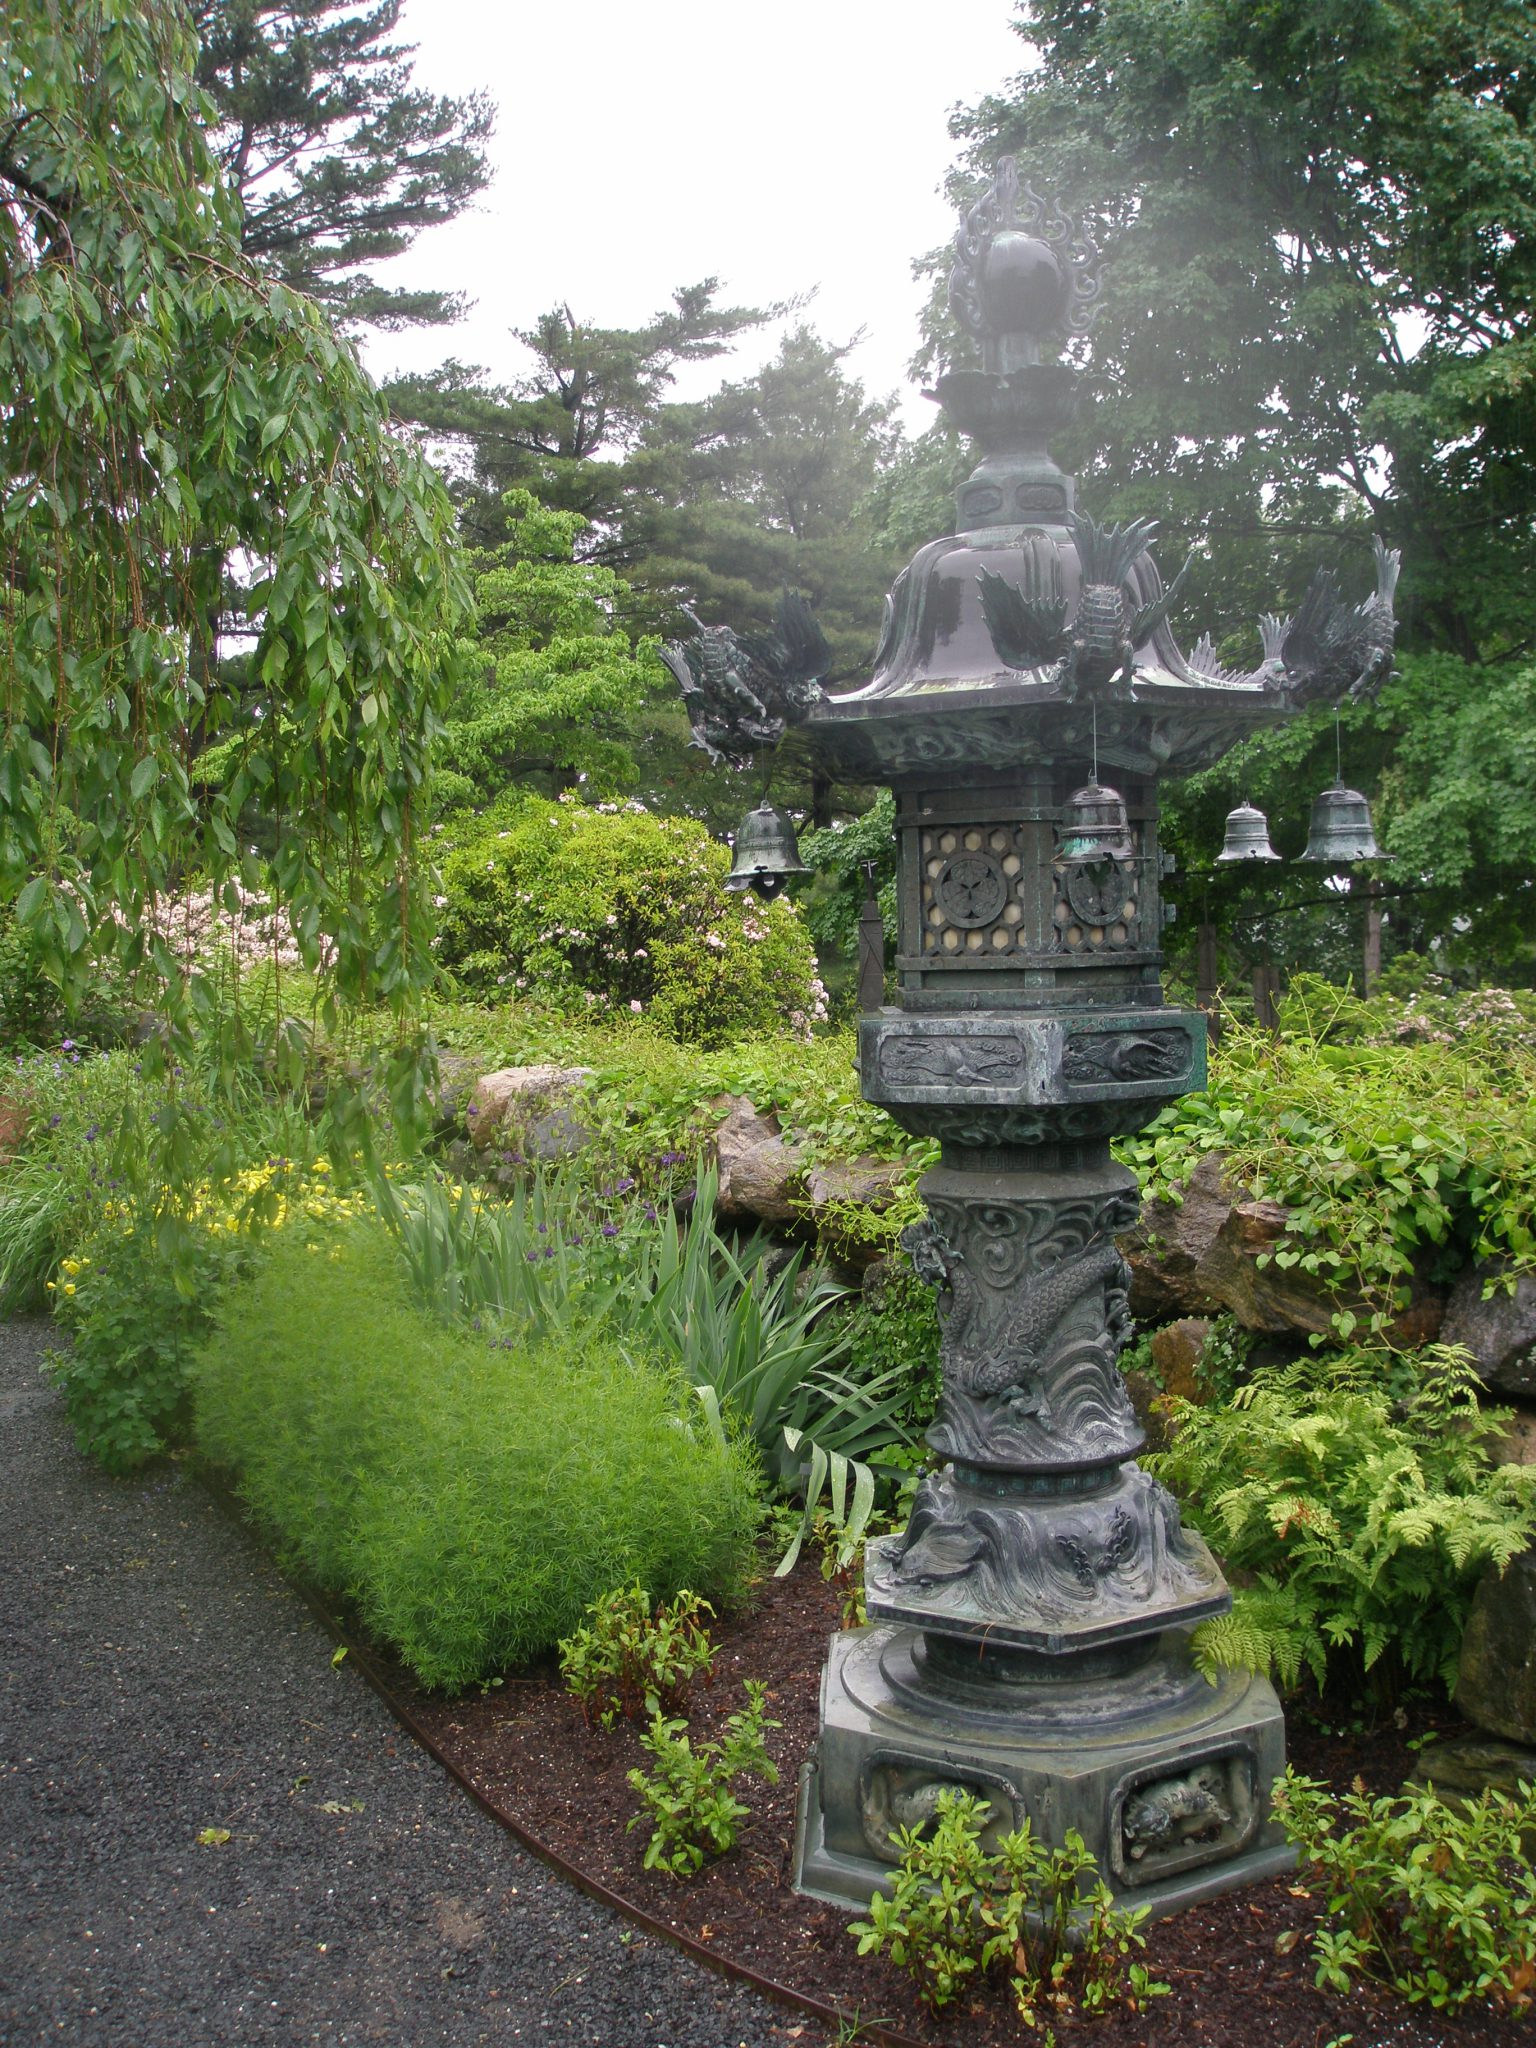 Japanese Bronze Lanterns, which have adorned the Brook Garden since 1908